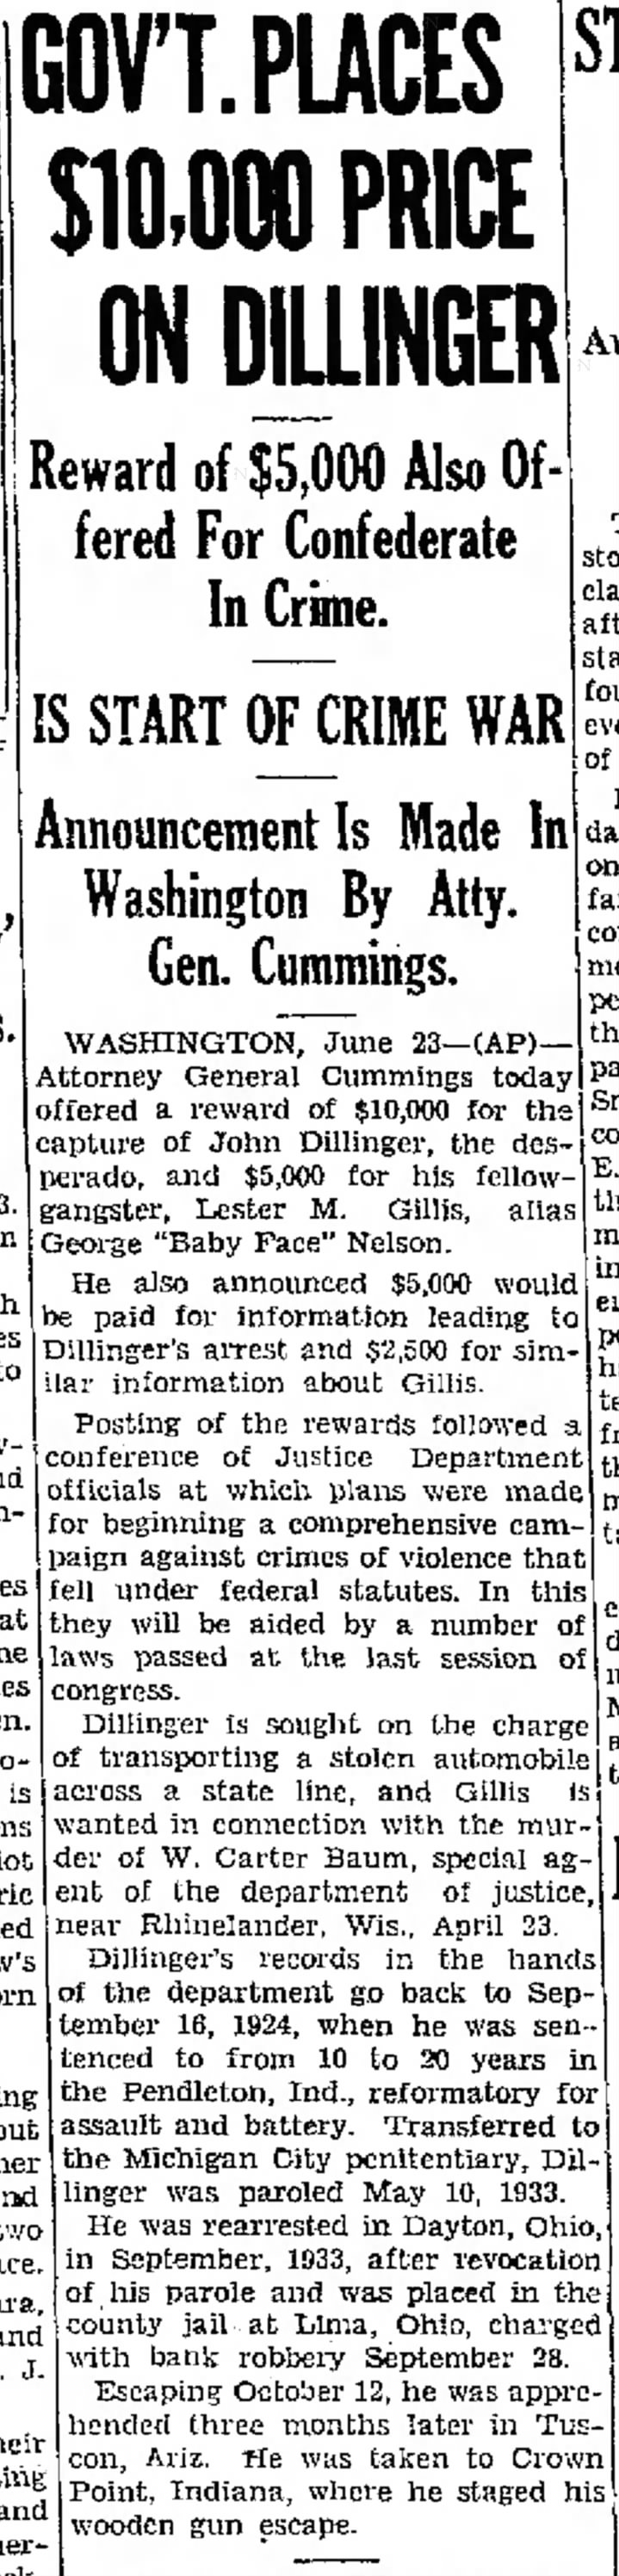 Gov't offers $10,000 for capture of Dillinger